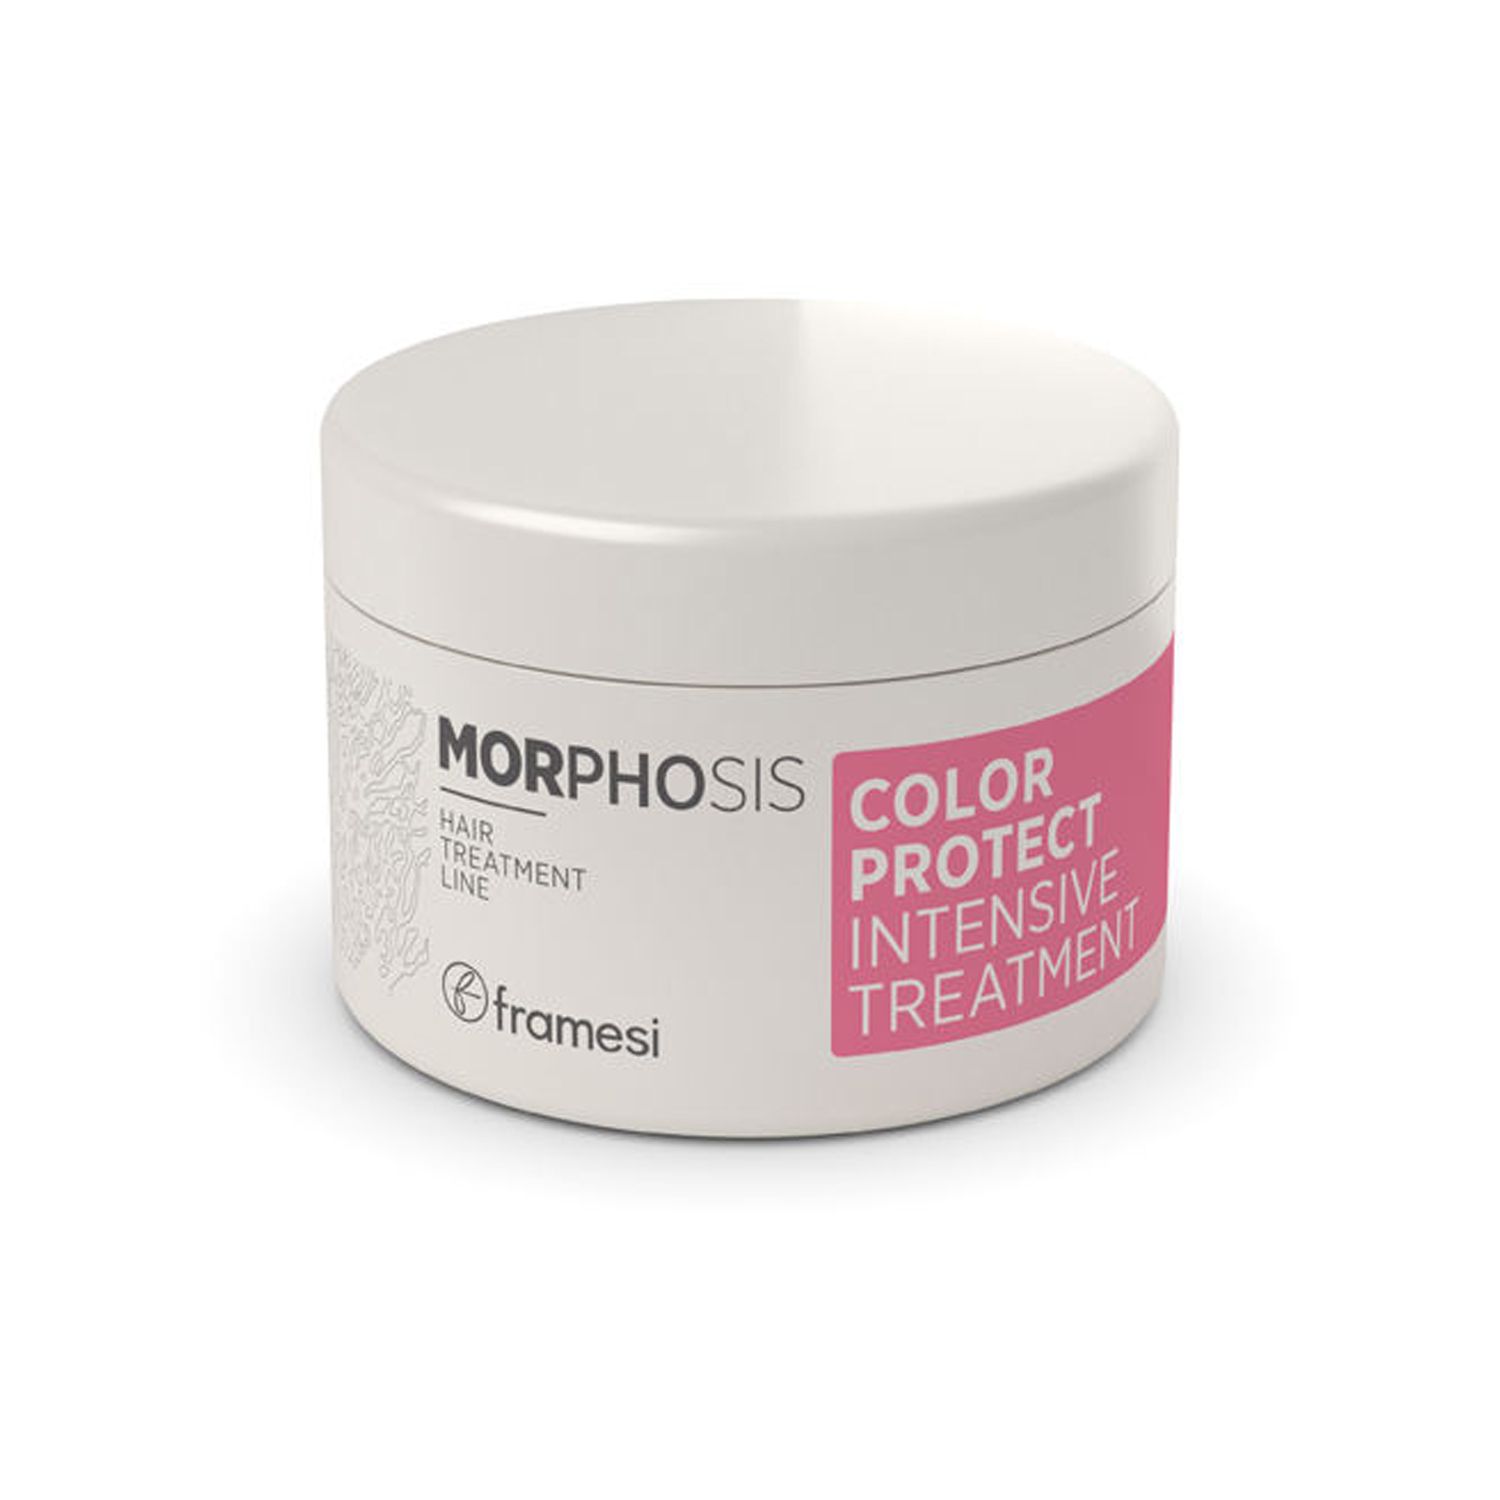 ماسک مو فرامسی مدل Morphosis Color Protect حجم 200 میلی لیتر